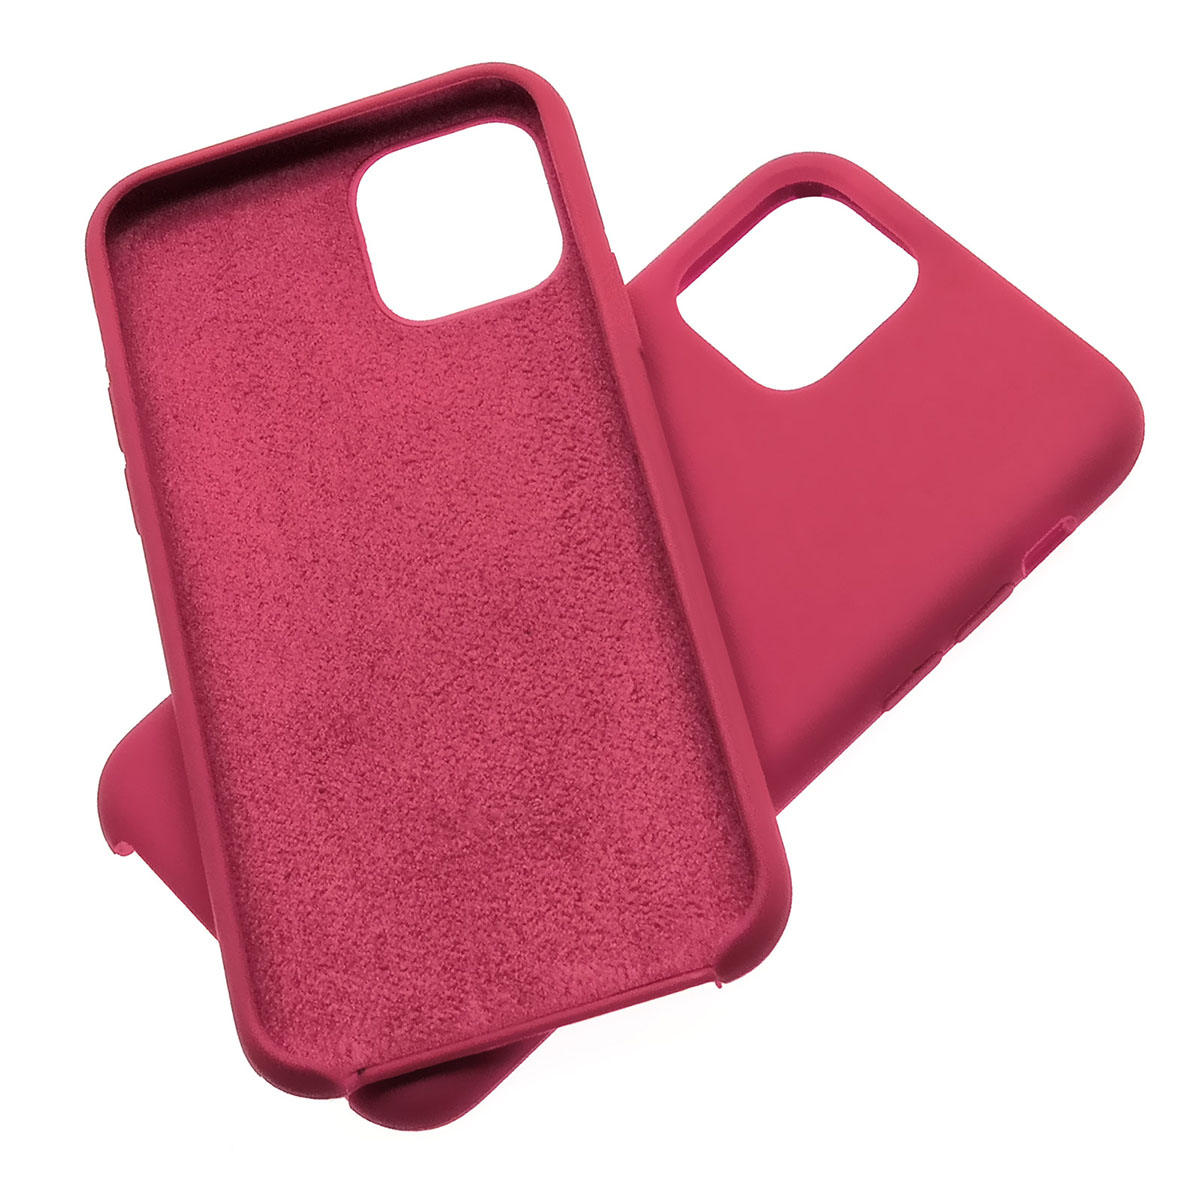 Чехол накладка Silicon Case для APPLE iPhone 11 Pro, силикон, бархат, цвет питайя.